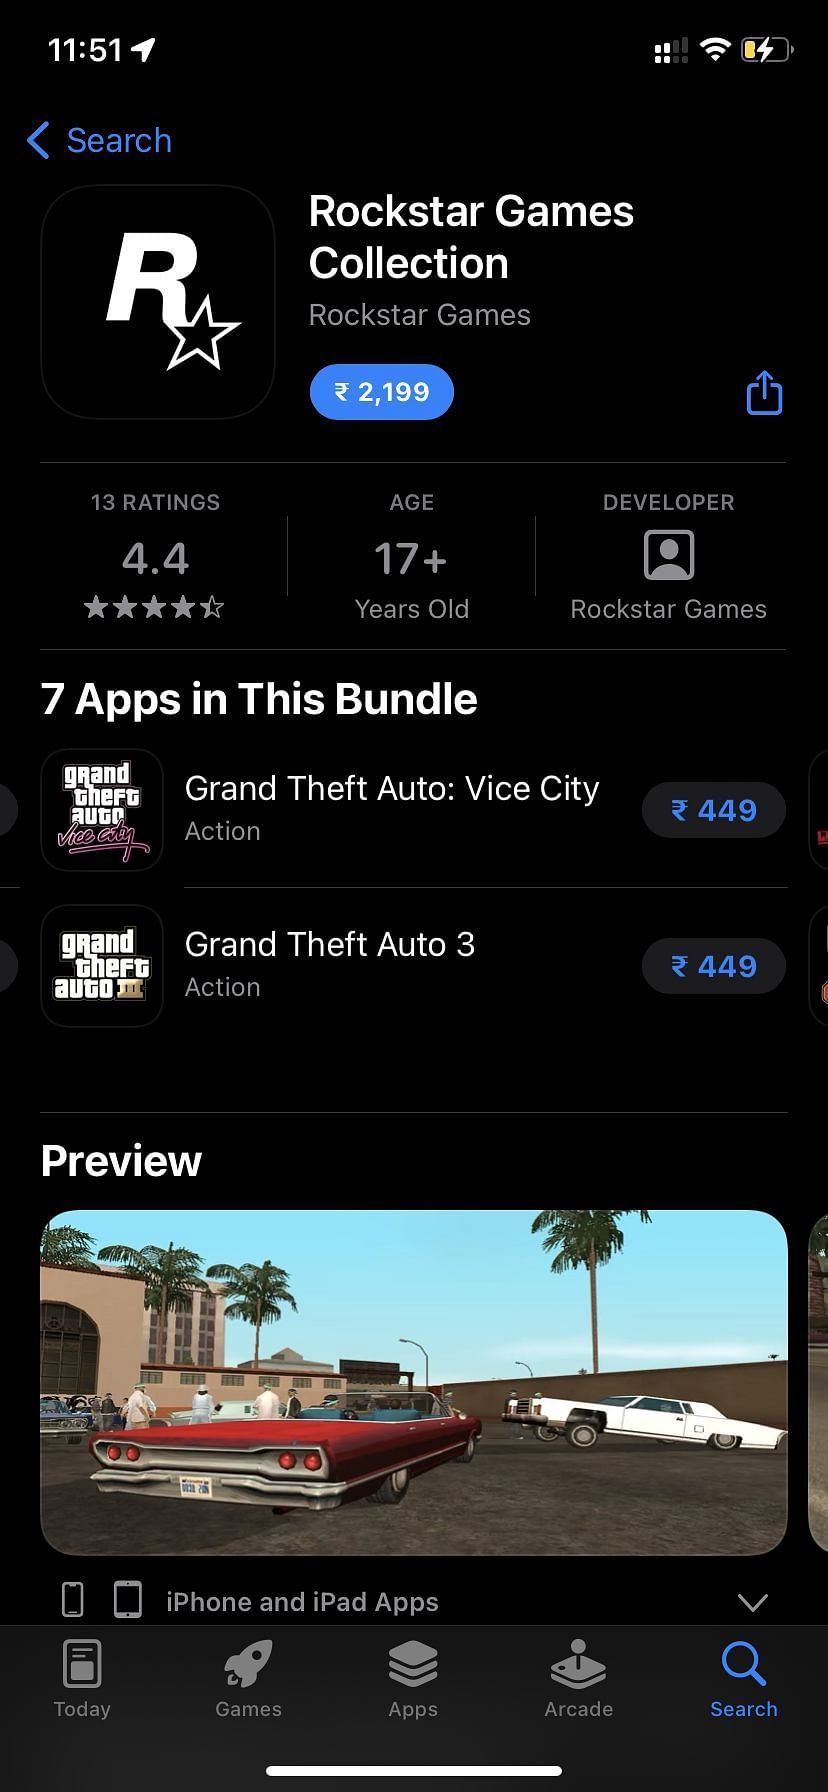 Rockstar games on the App Store. (Image via App Store)